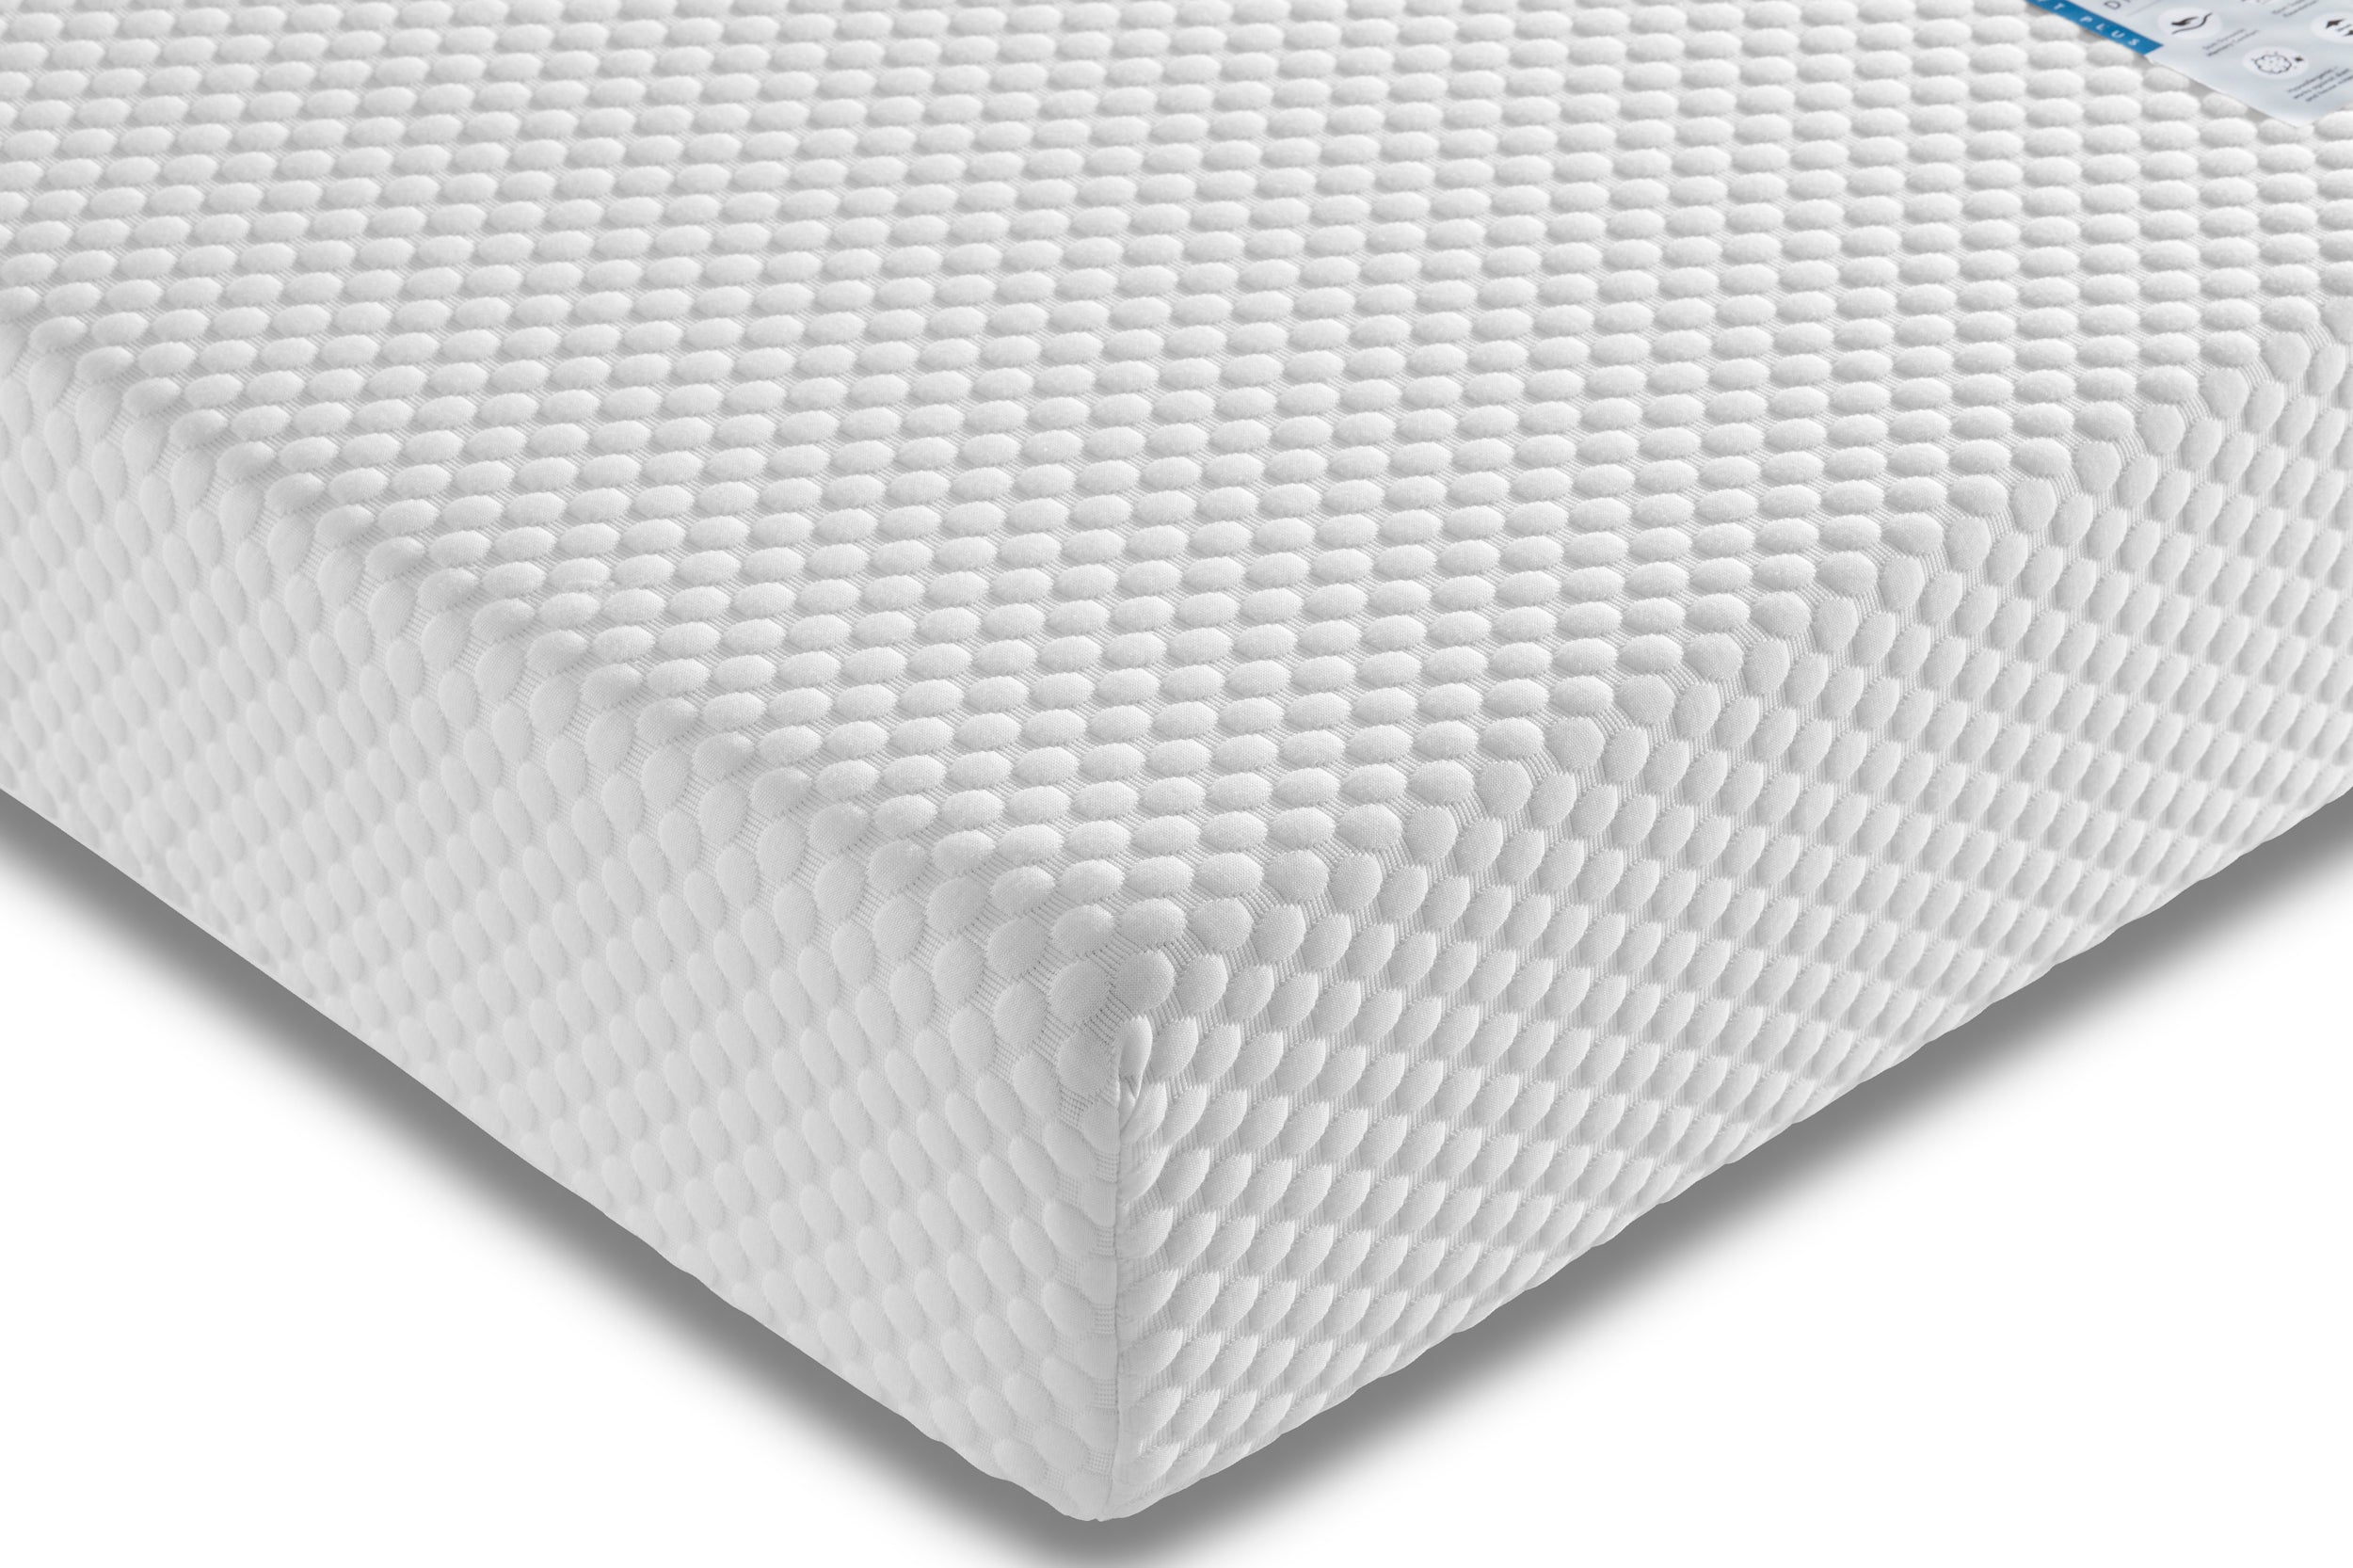 Shift Plus Hypoallergenic Mattress - 2 Foam Layers